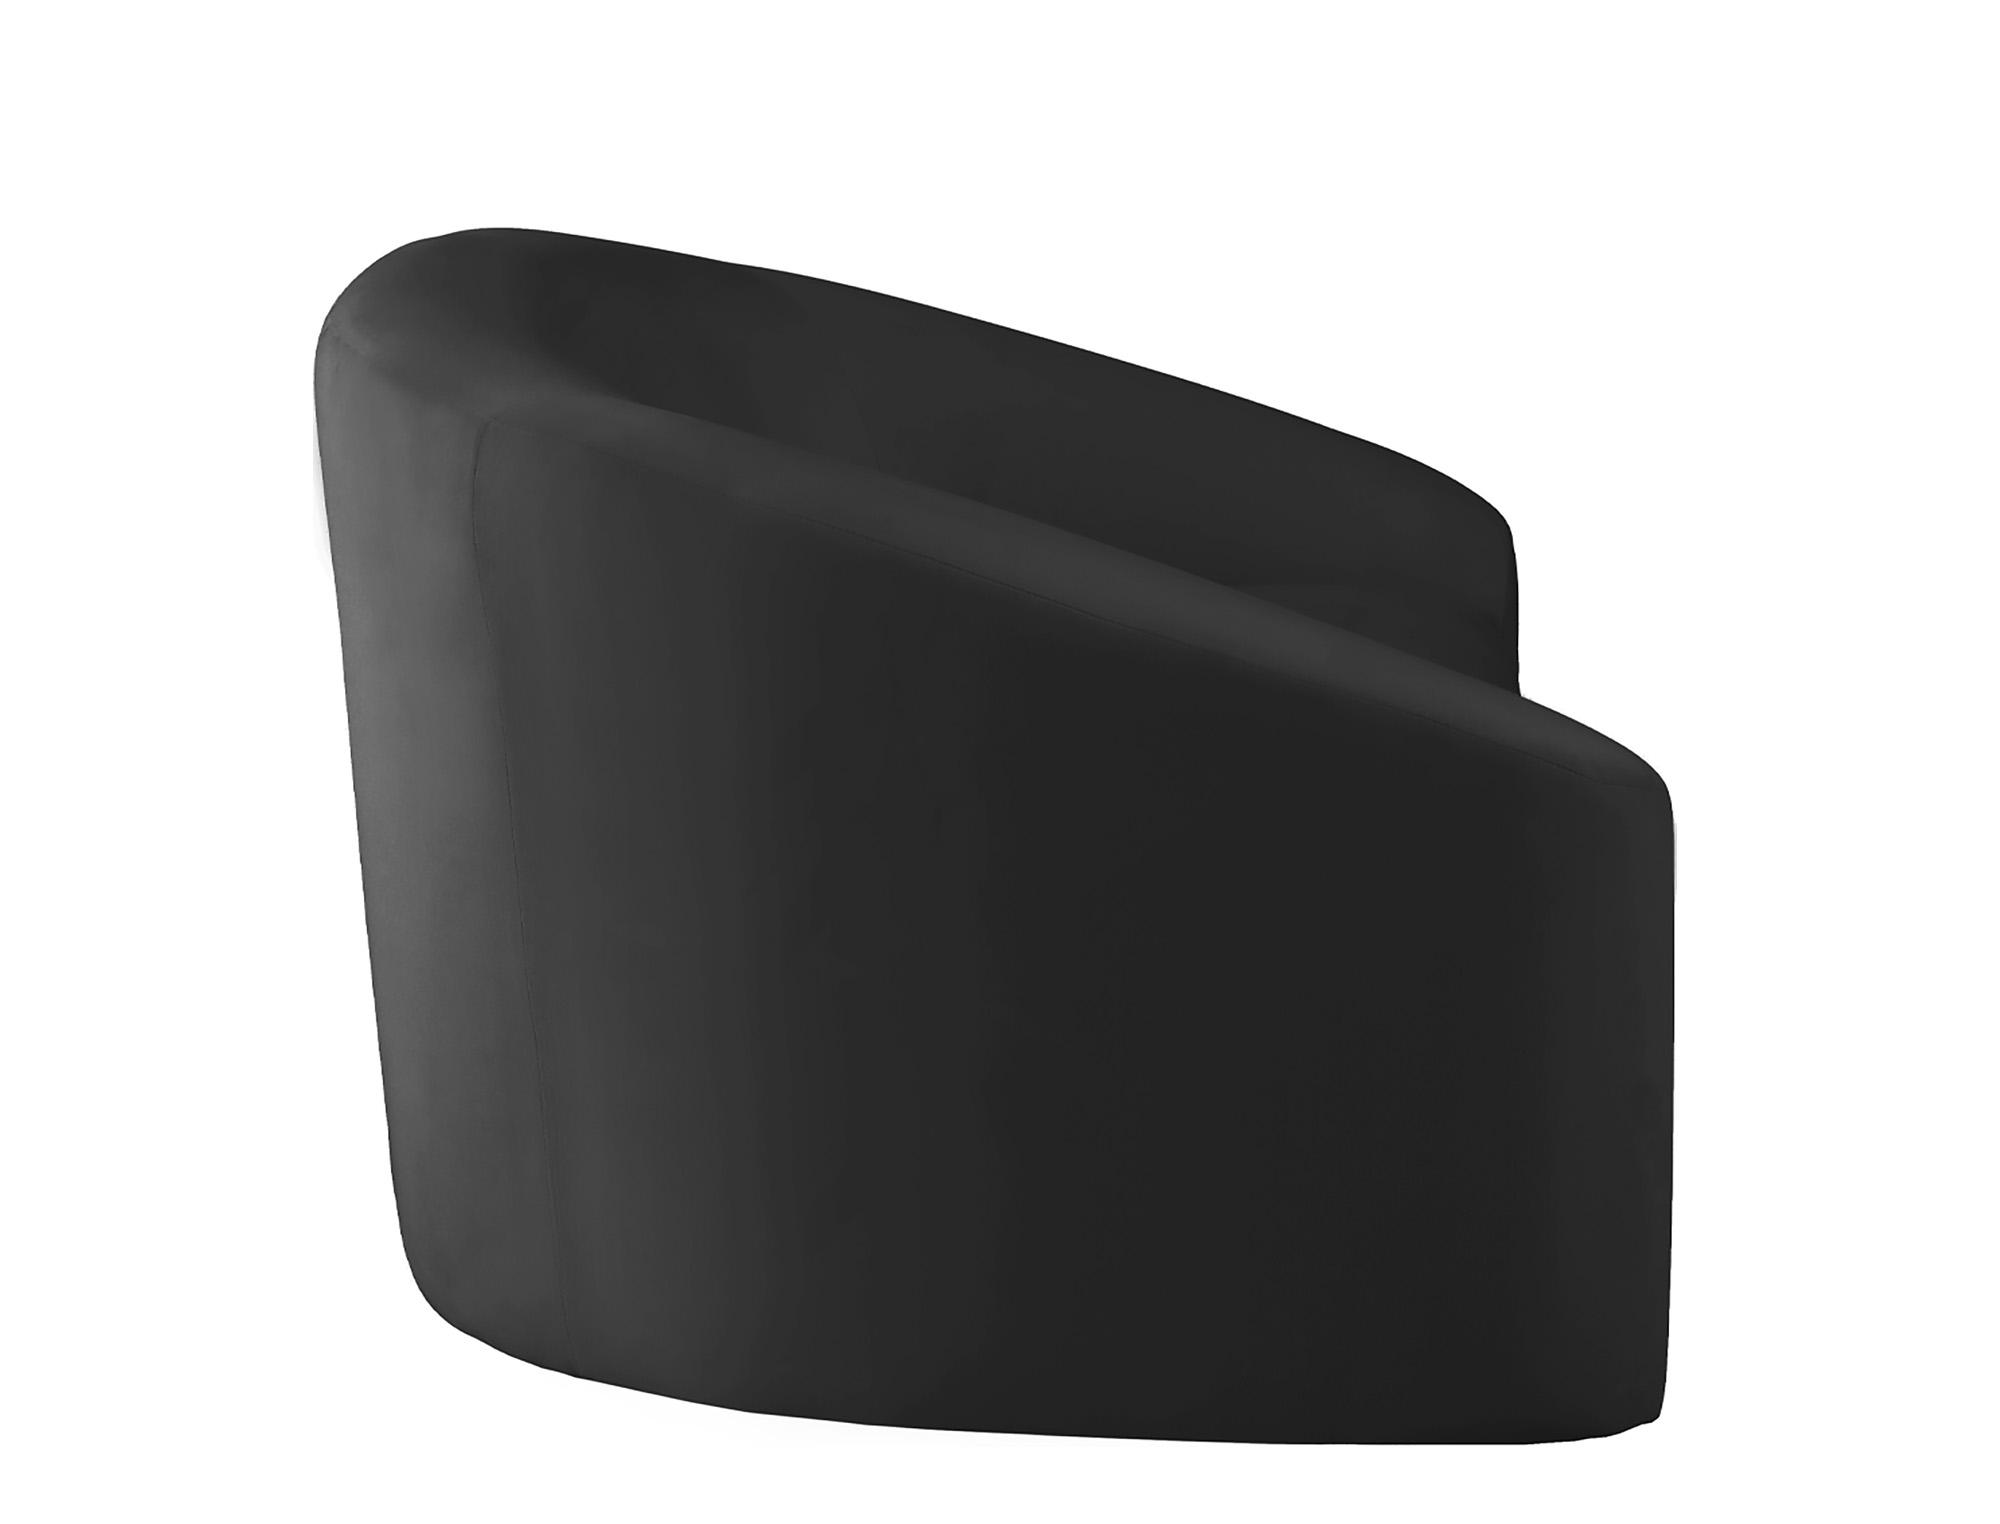 

    
Black Velvet Sofa Set 3Pcs RILEY 610Black-S Meridian Contemporary Modern
